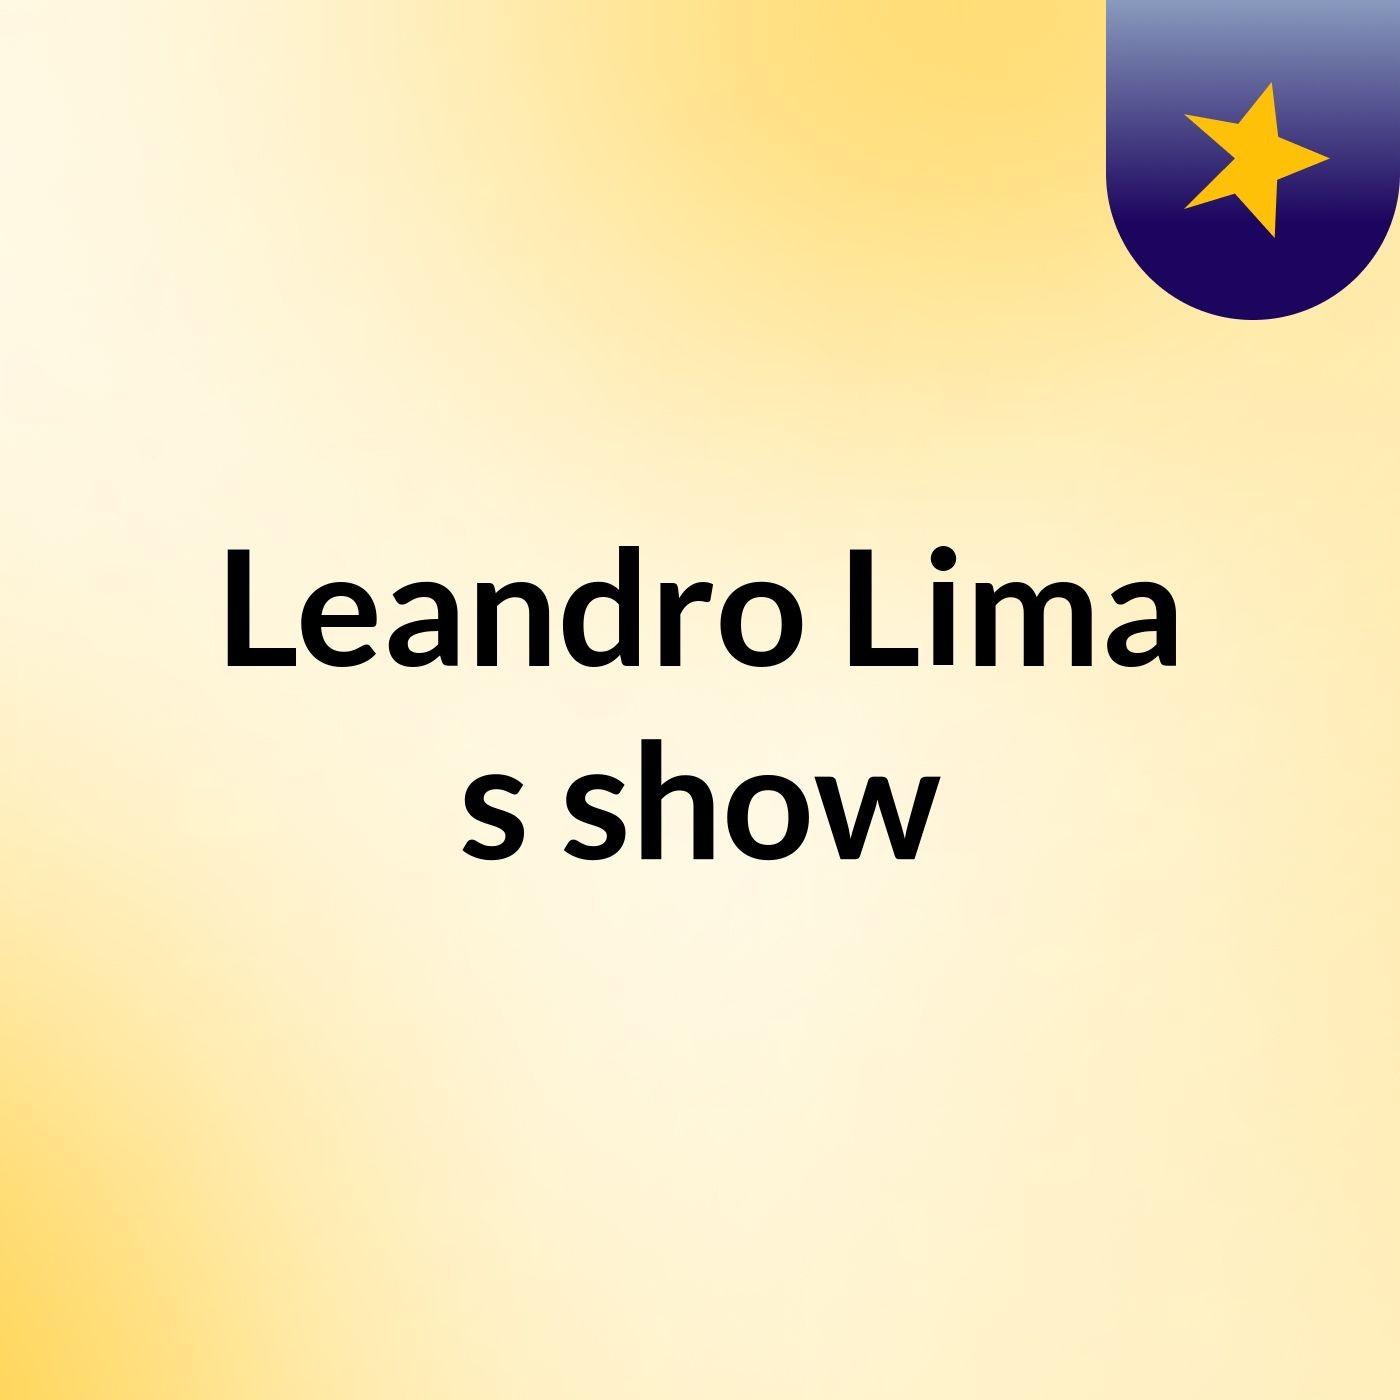 Leandro Lima's show